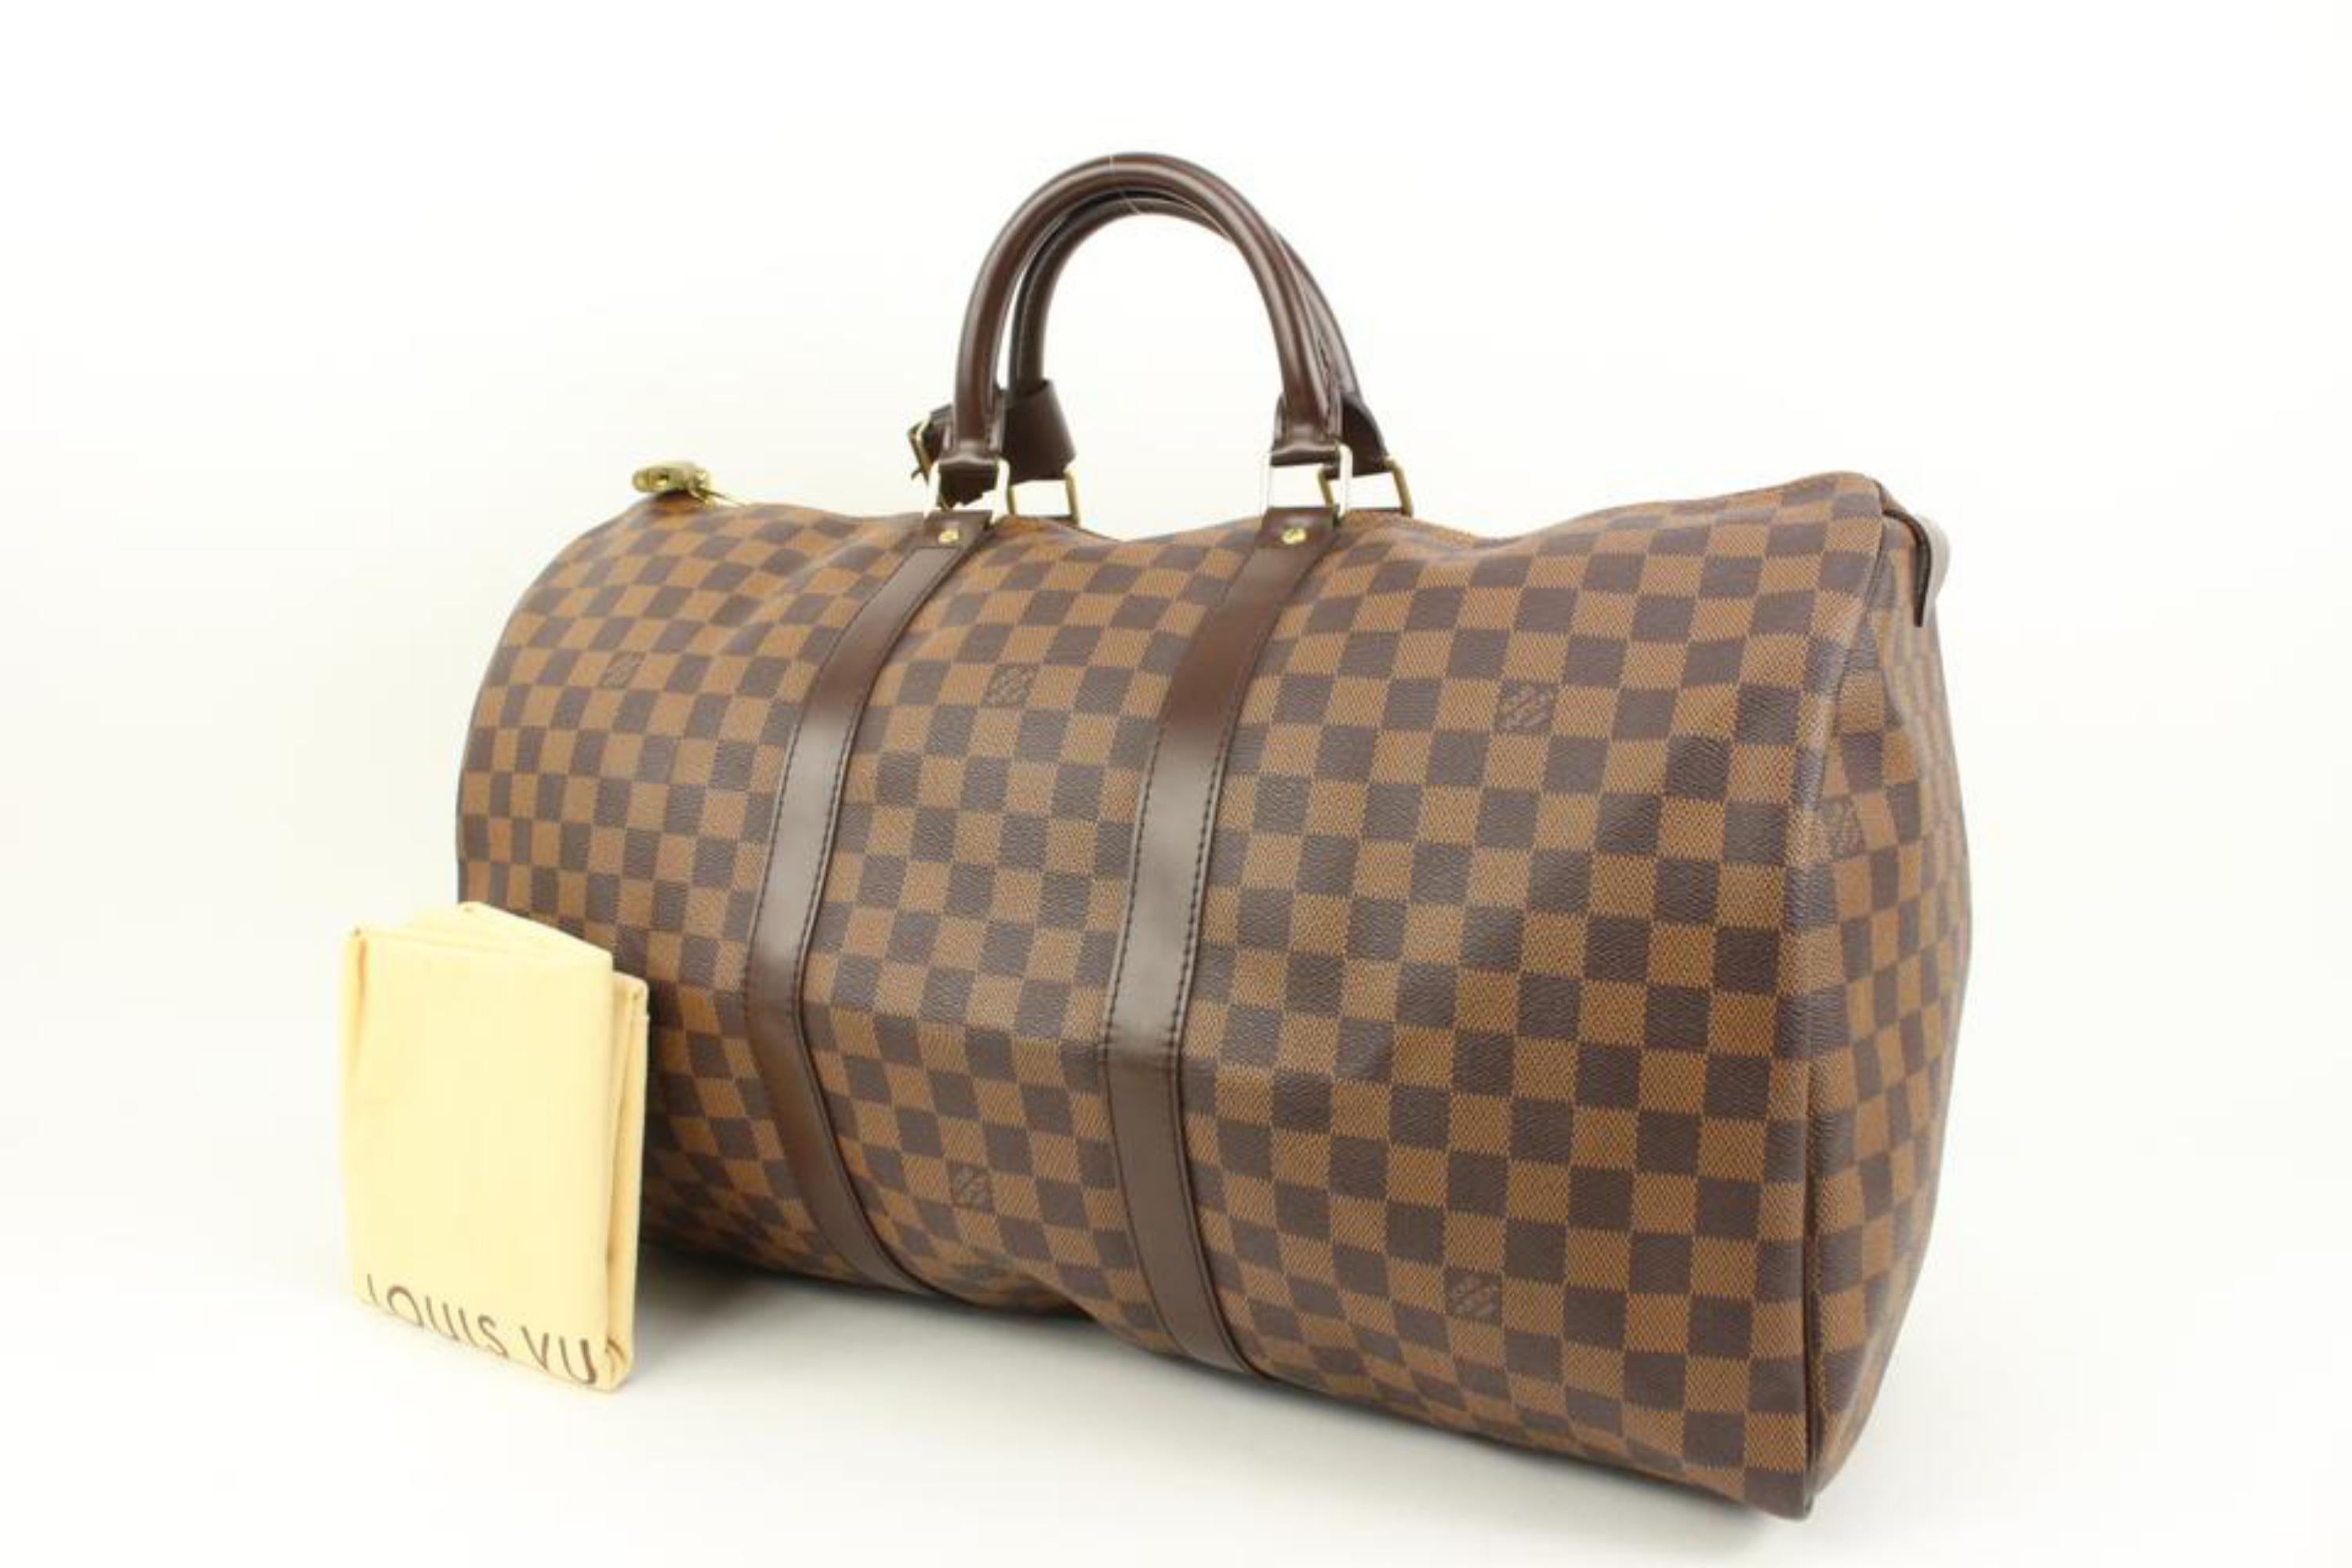 Louis Vuitton Damier Ebene Keepall 50 Duffle Travel Bag 41lk75
Date Code/Serial Number: MB0076
Made In: France
Measurements: Length:  20